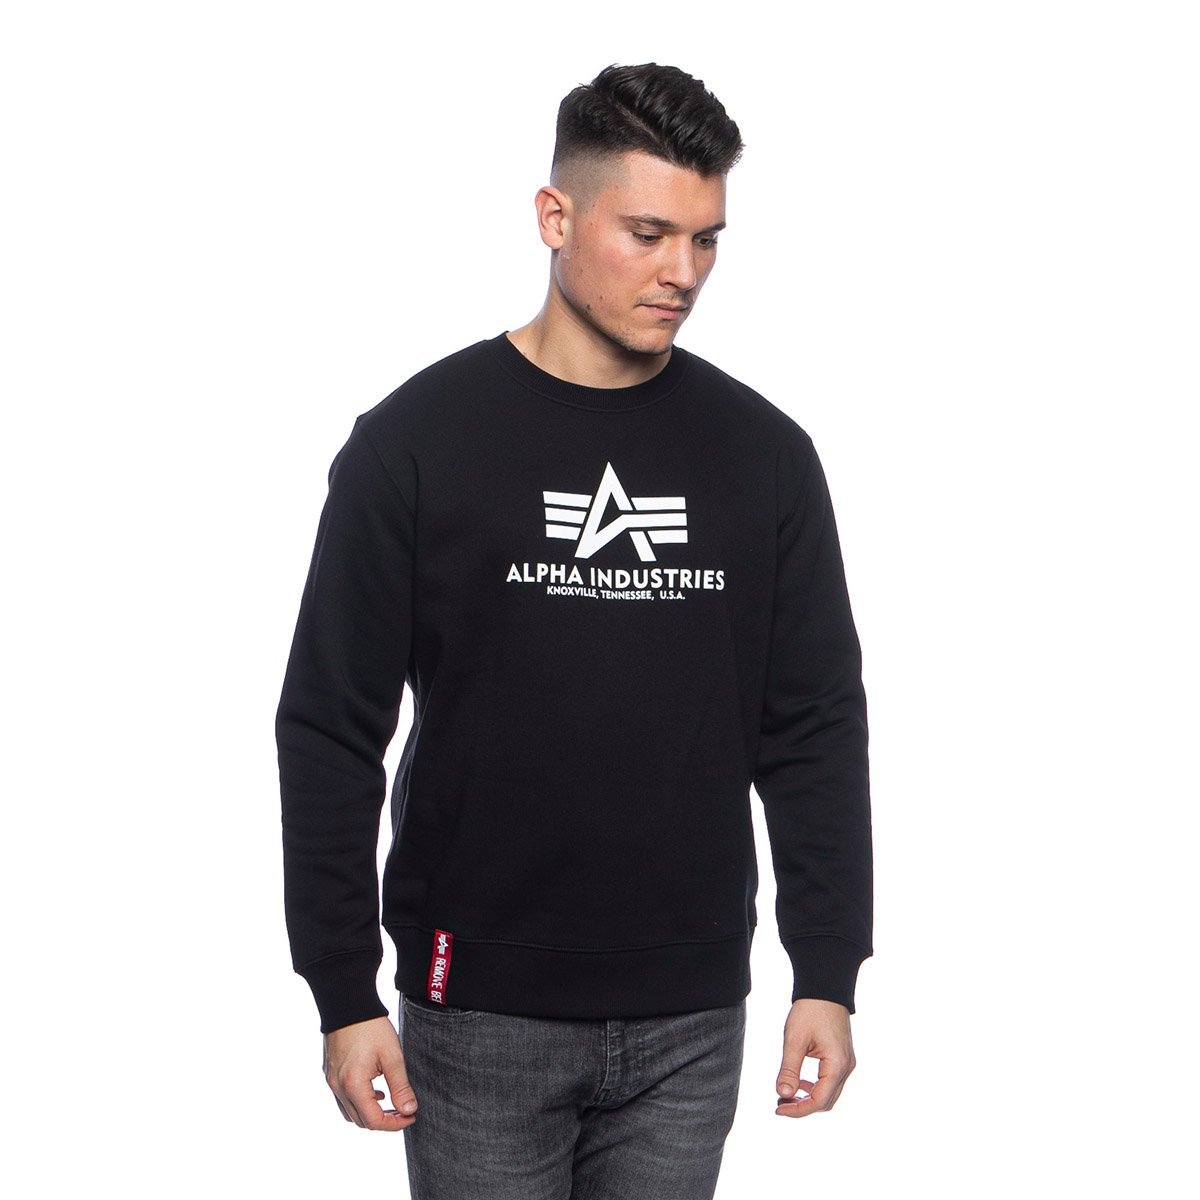 Sweatshirt Alpha Sweater Industries black Basic